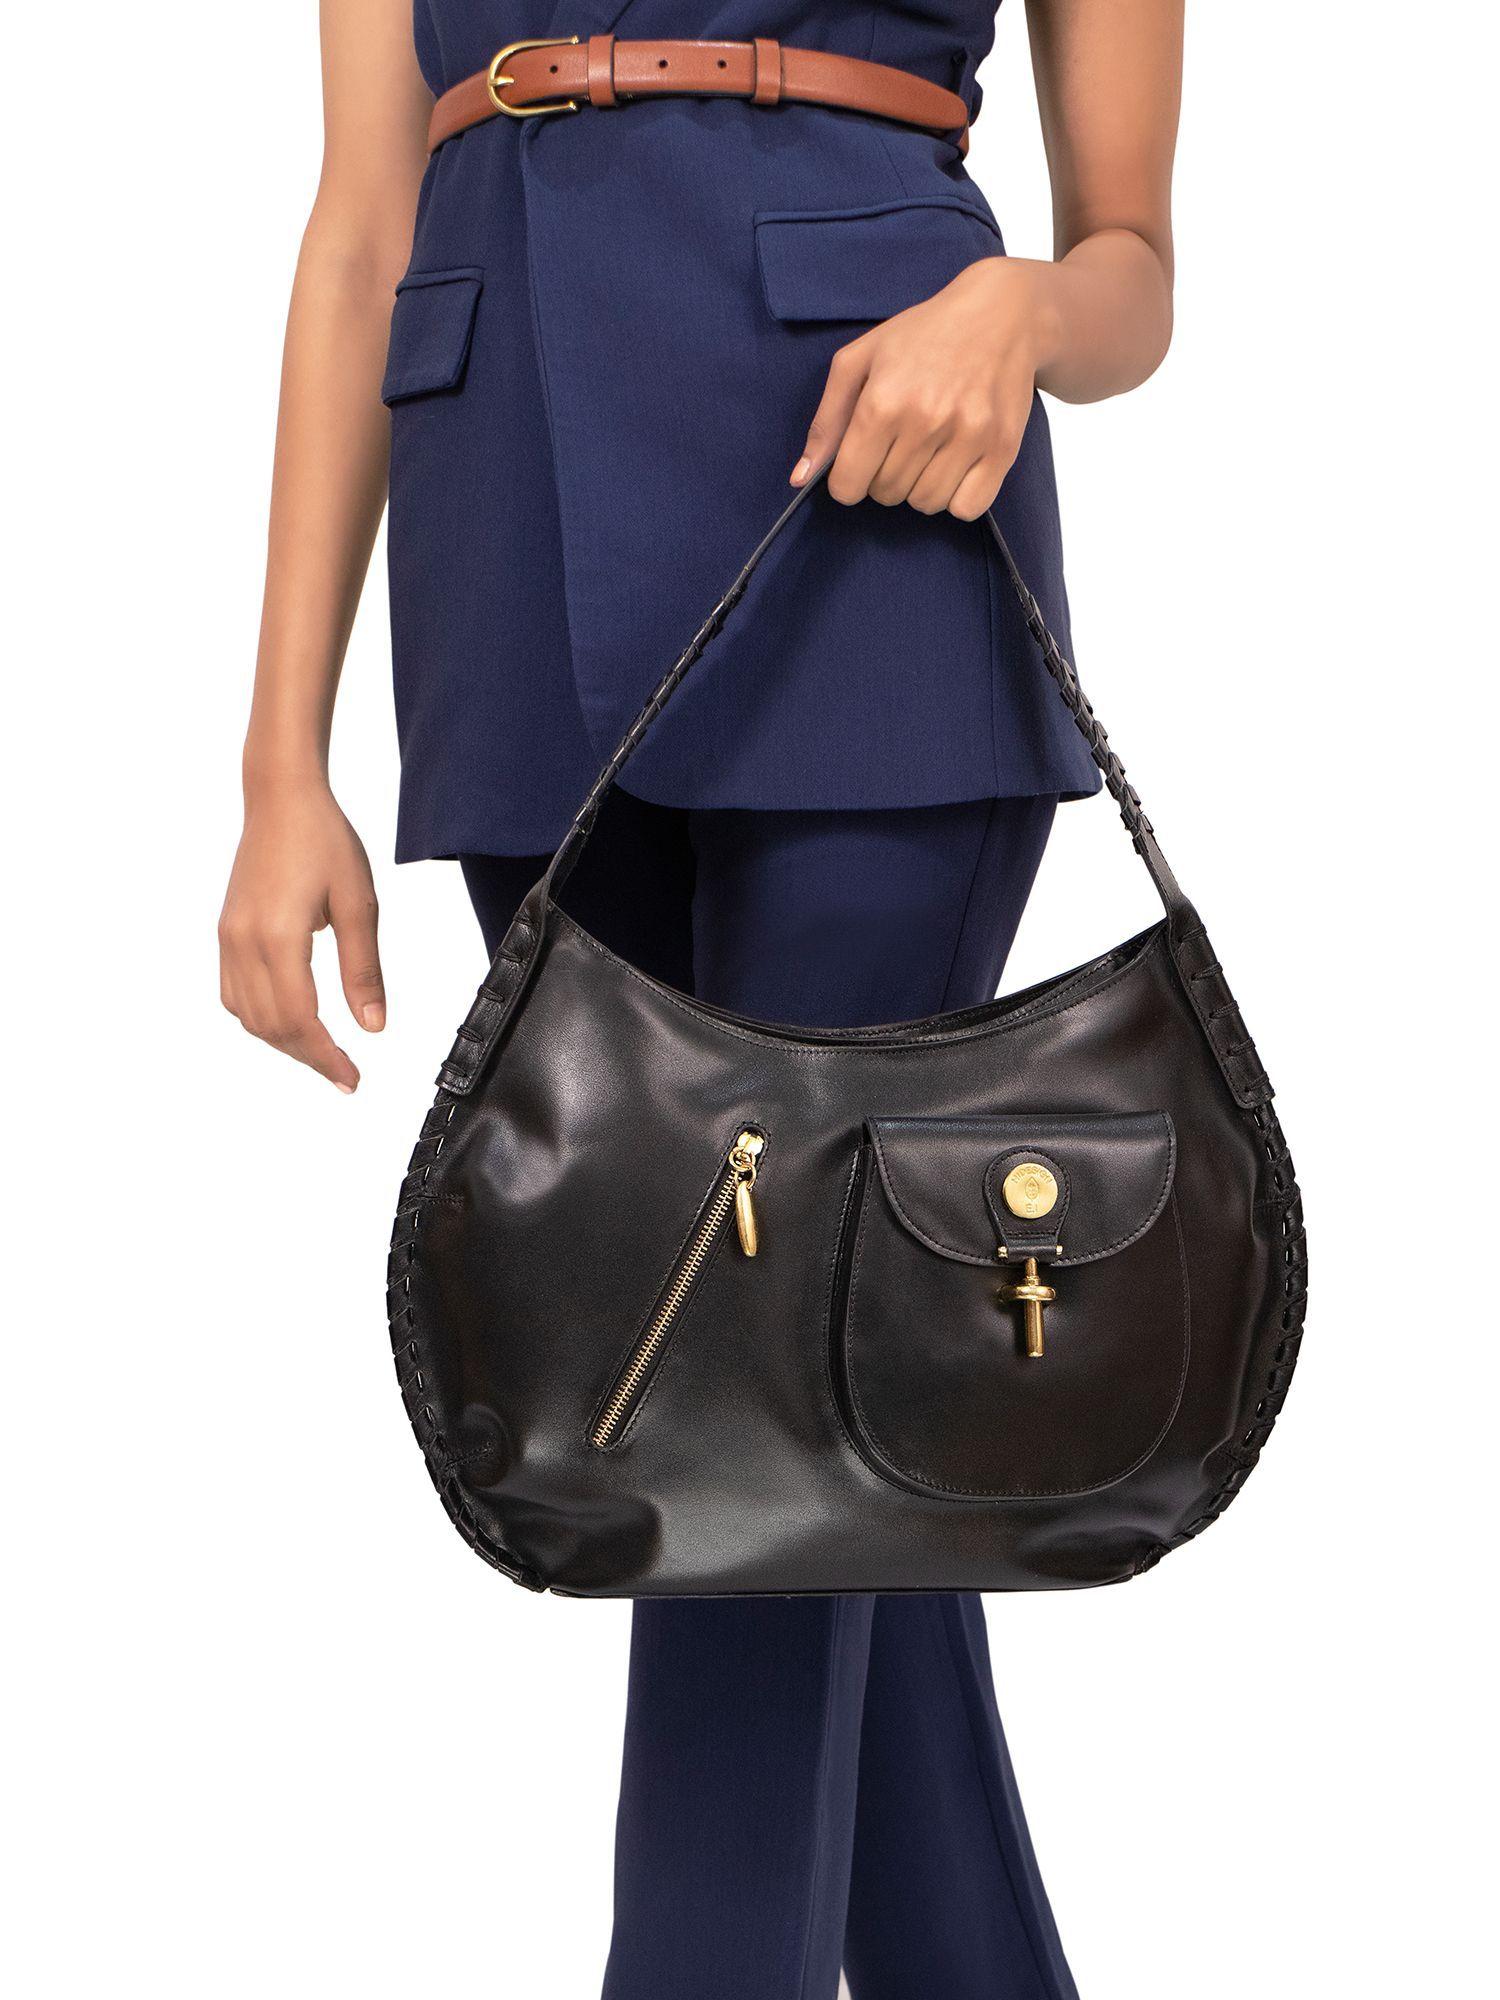 growth 01 large casual black womens office handbag (l)